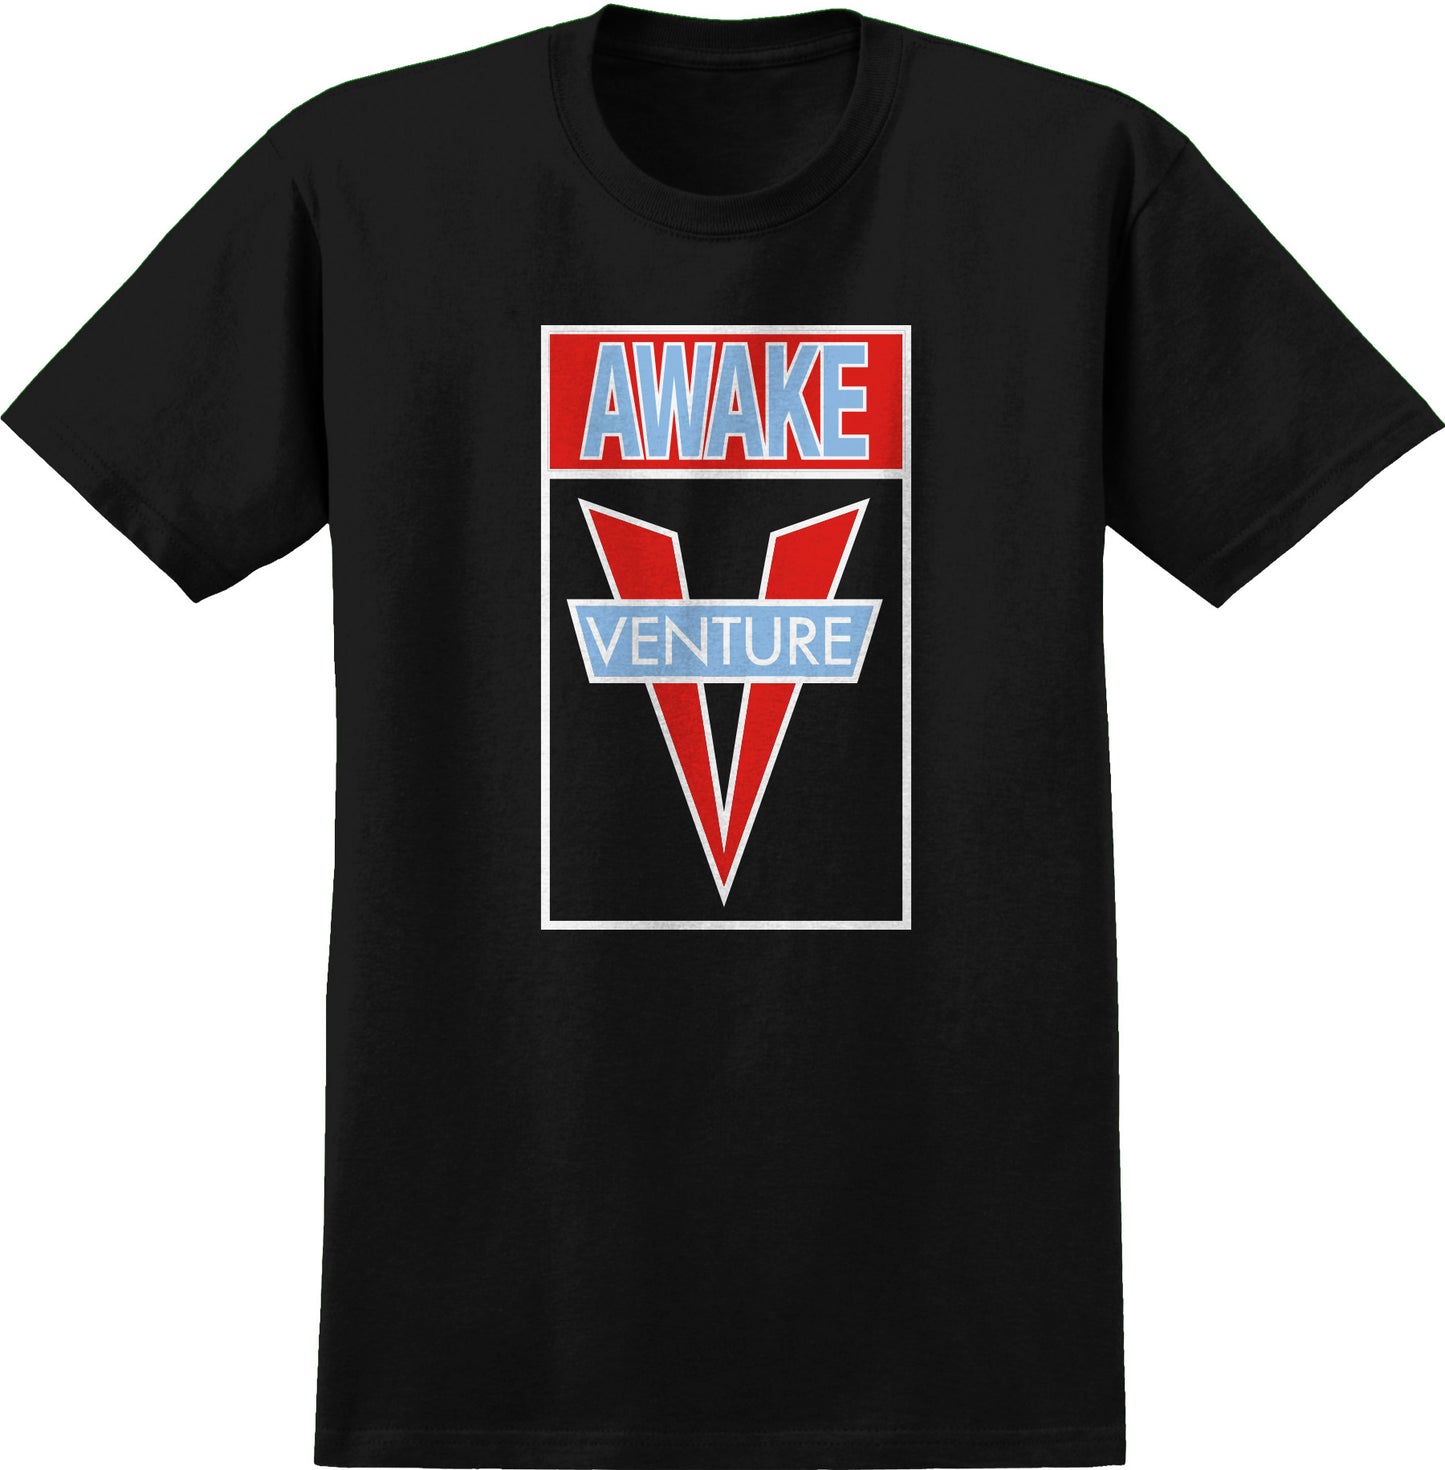 VENTURE - Awake Tee Black/Red